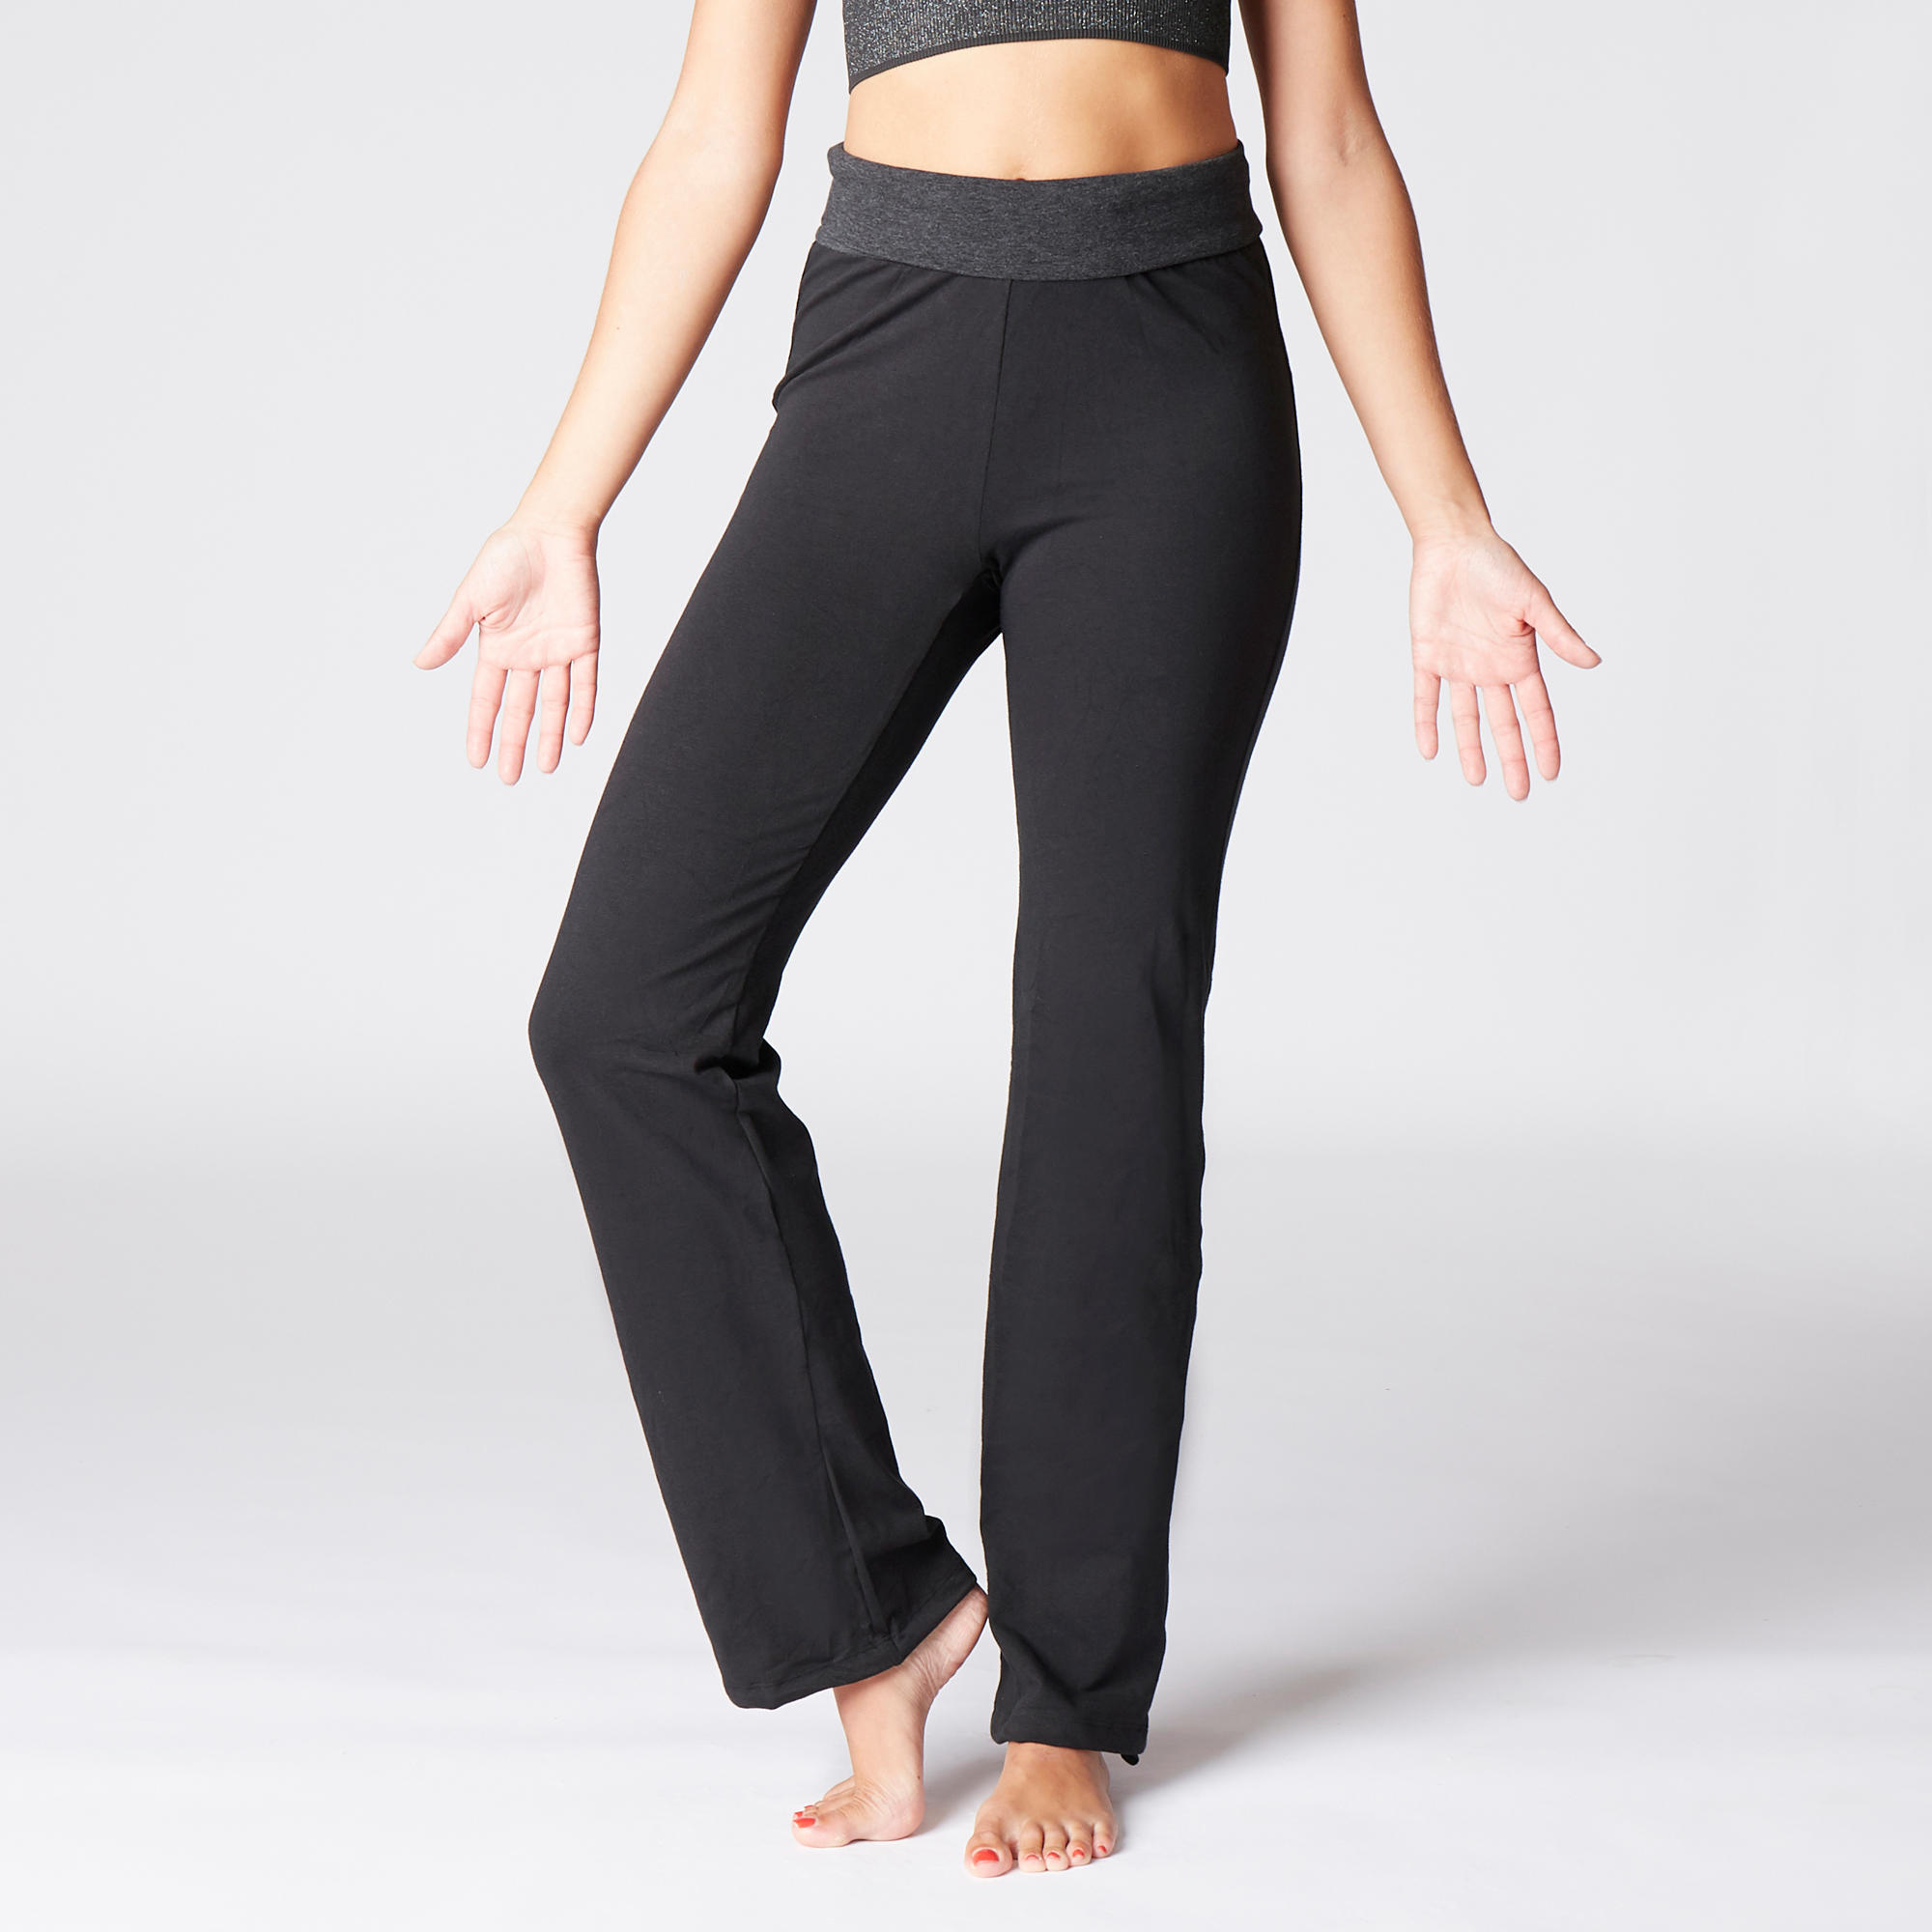 KIMJALY Women's Yoga Cotton Bottoms - Black/Grey